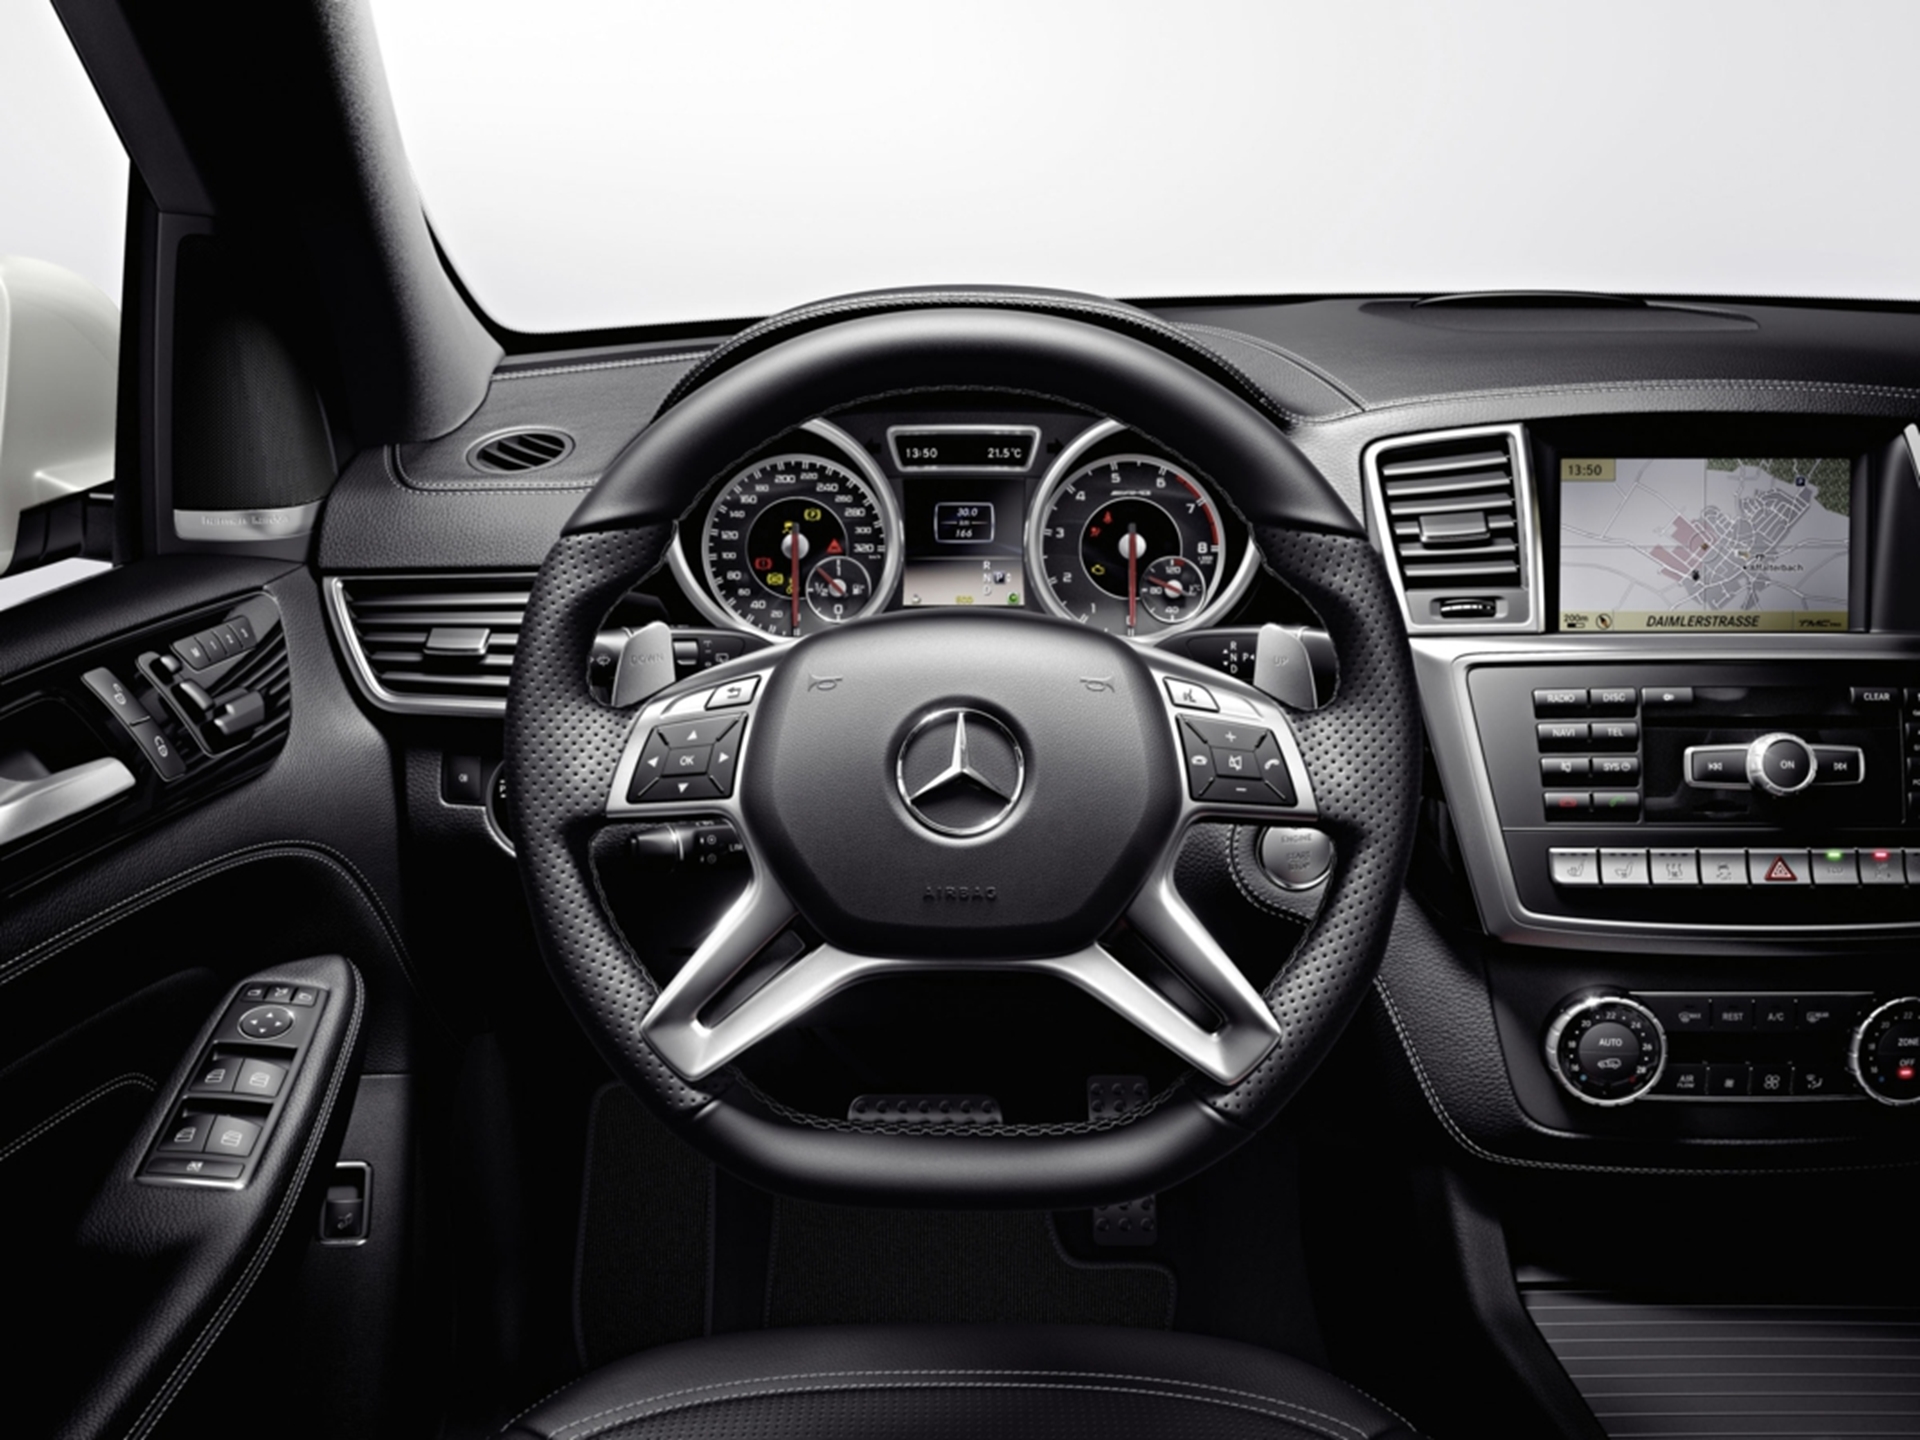 Mercedes-Benz ML 63 AMG Design: impressive credentials